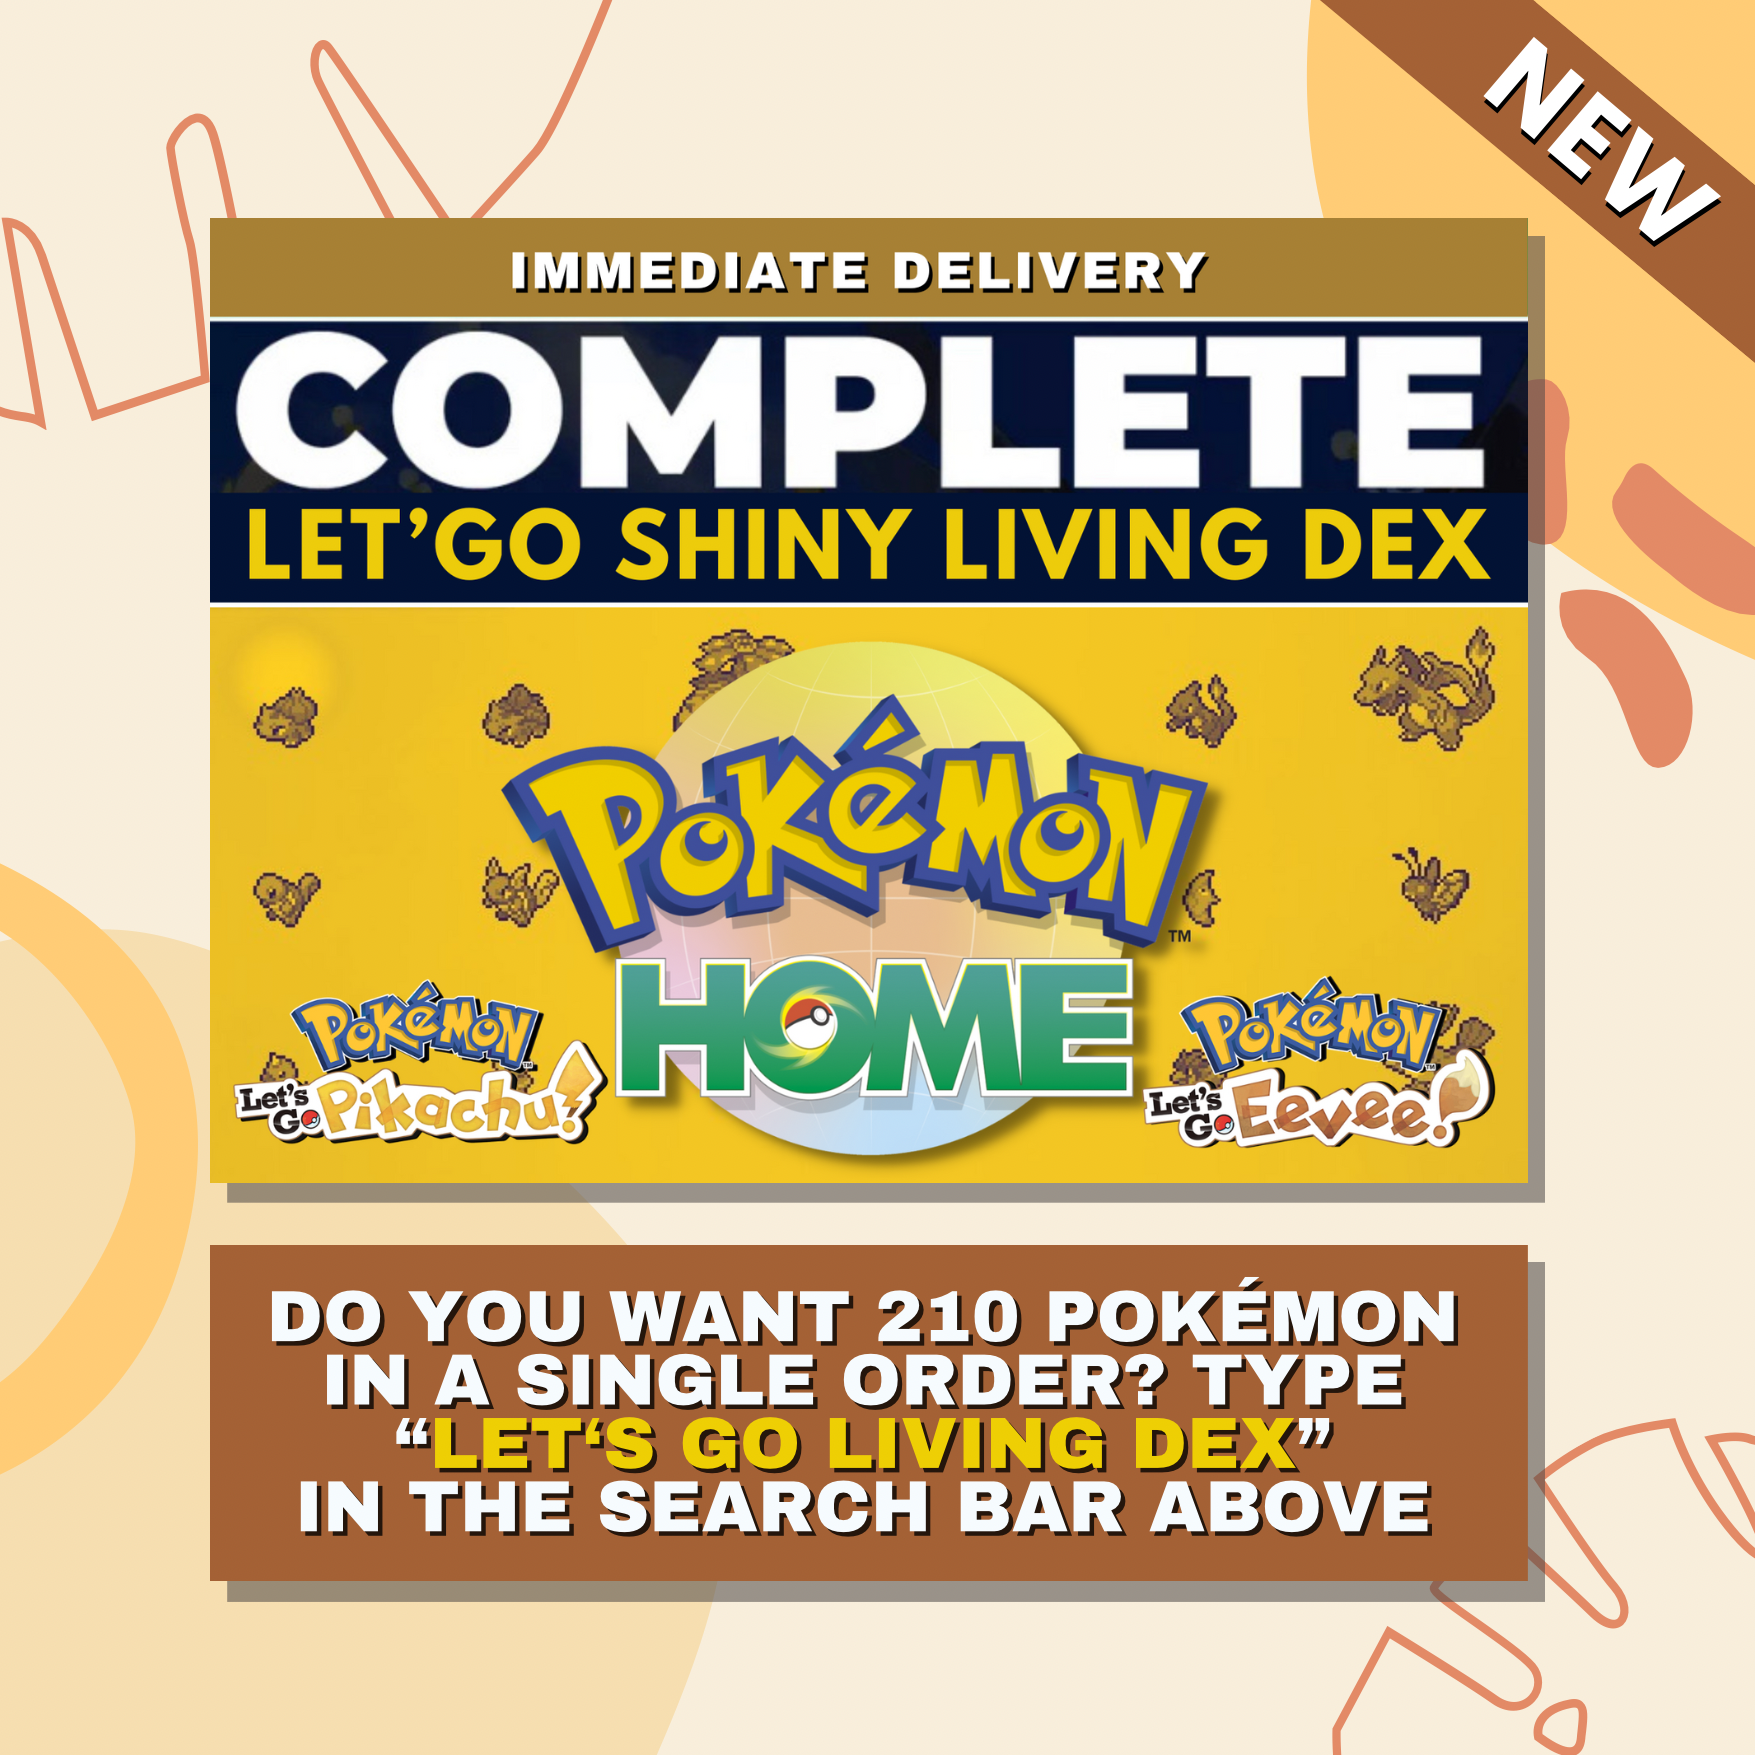 Victreebel Shiny ✨ or Non Shiny Pokémon Let's Go Pikachu Eevee Level 100 Competitive Battle Ready 6 IV 100% Legit Legal Customizable Custom OT by Shiny Living Dex | Shiny Living Dex